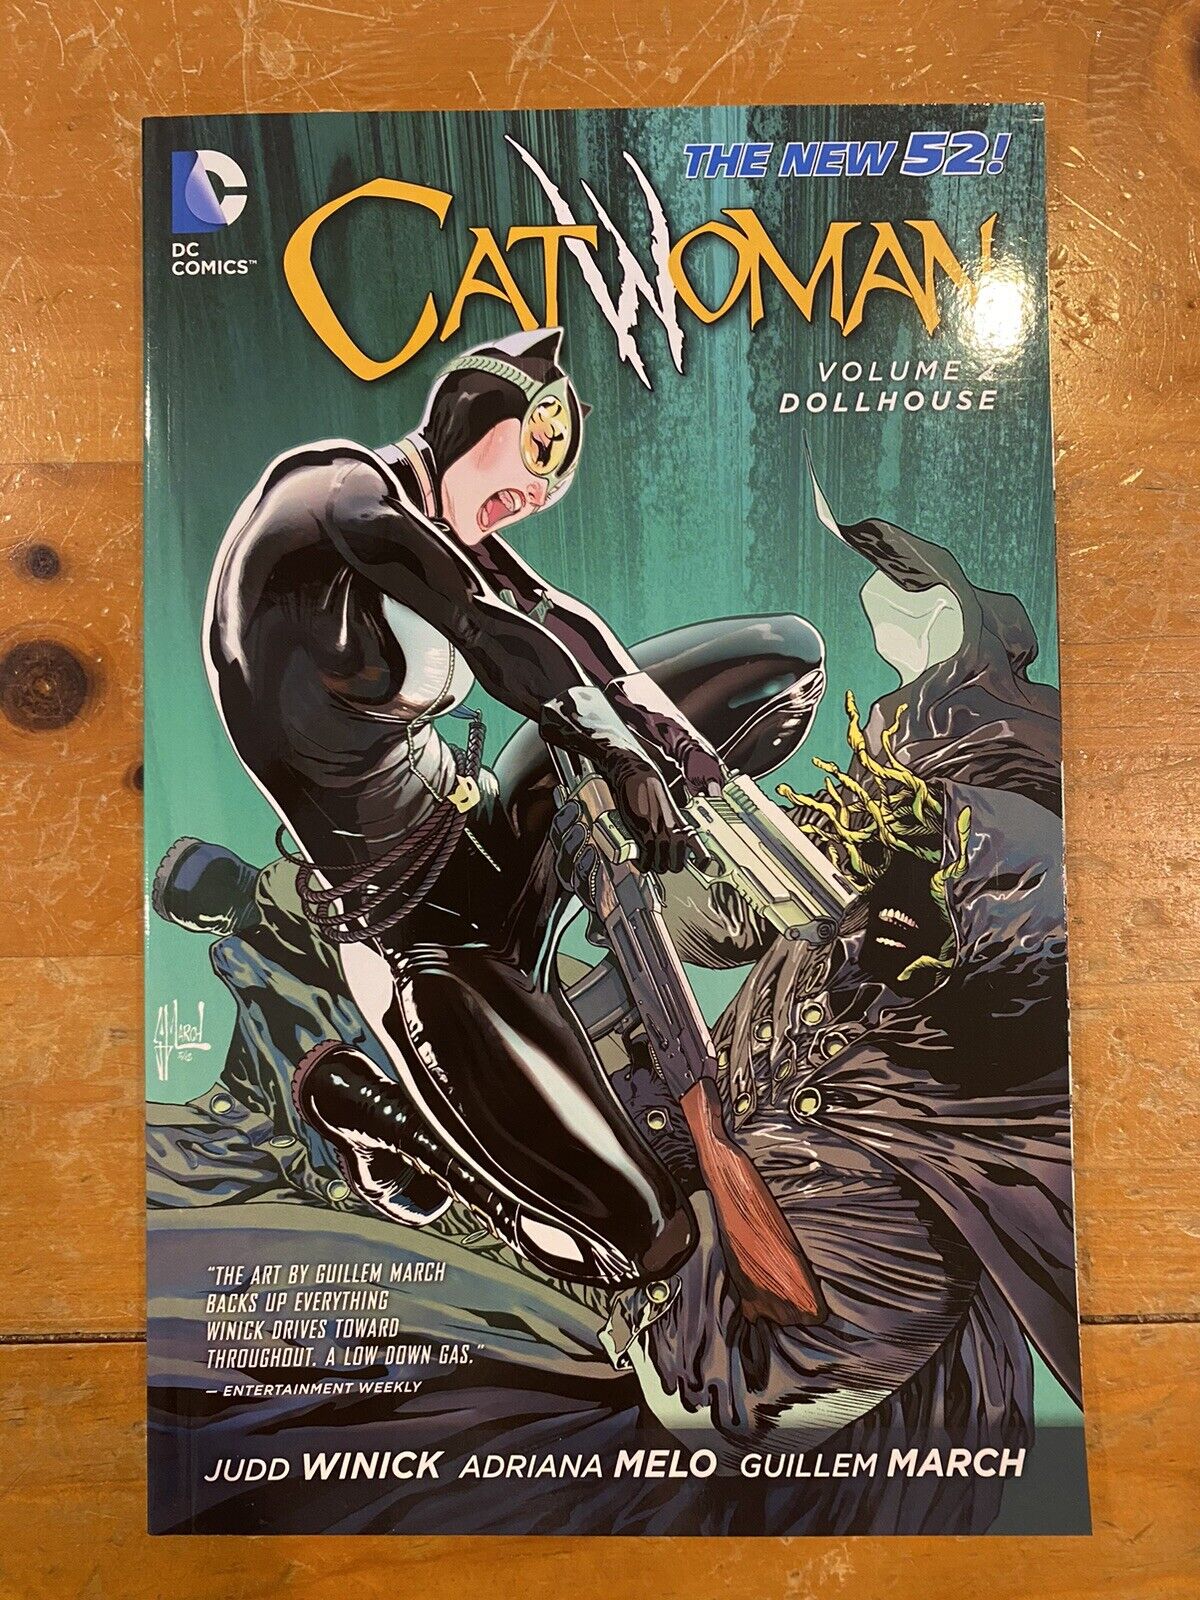 Catwoman TPB #2 New 52 (DC Comics 2013) by Judd Winick